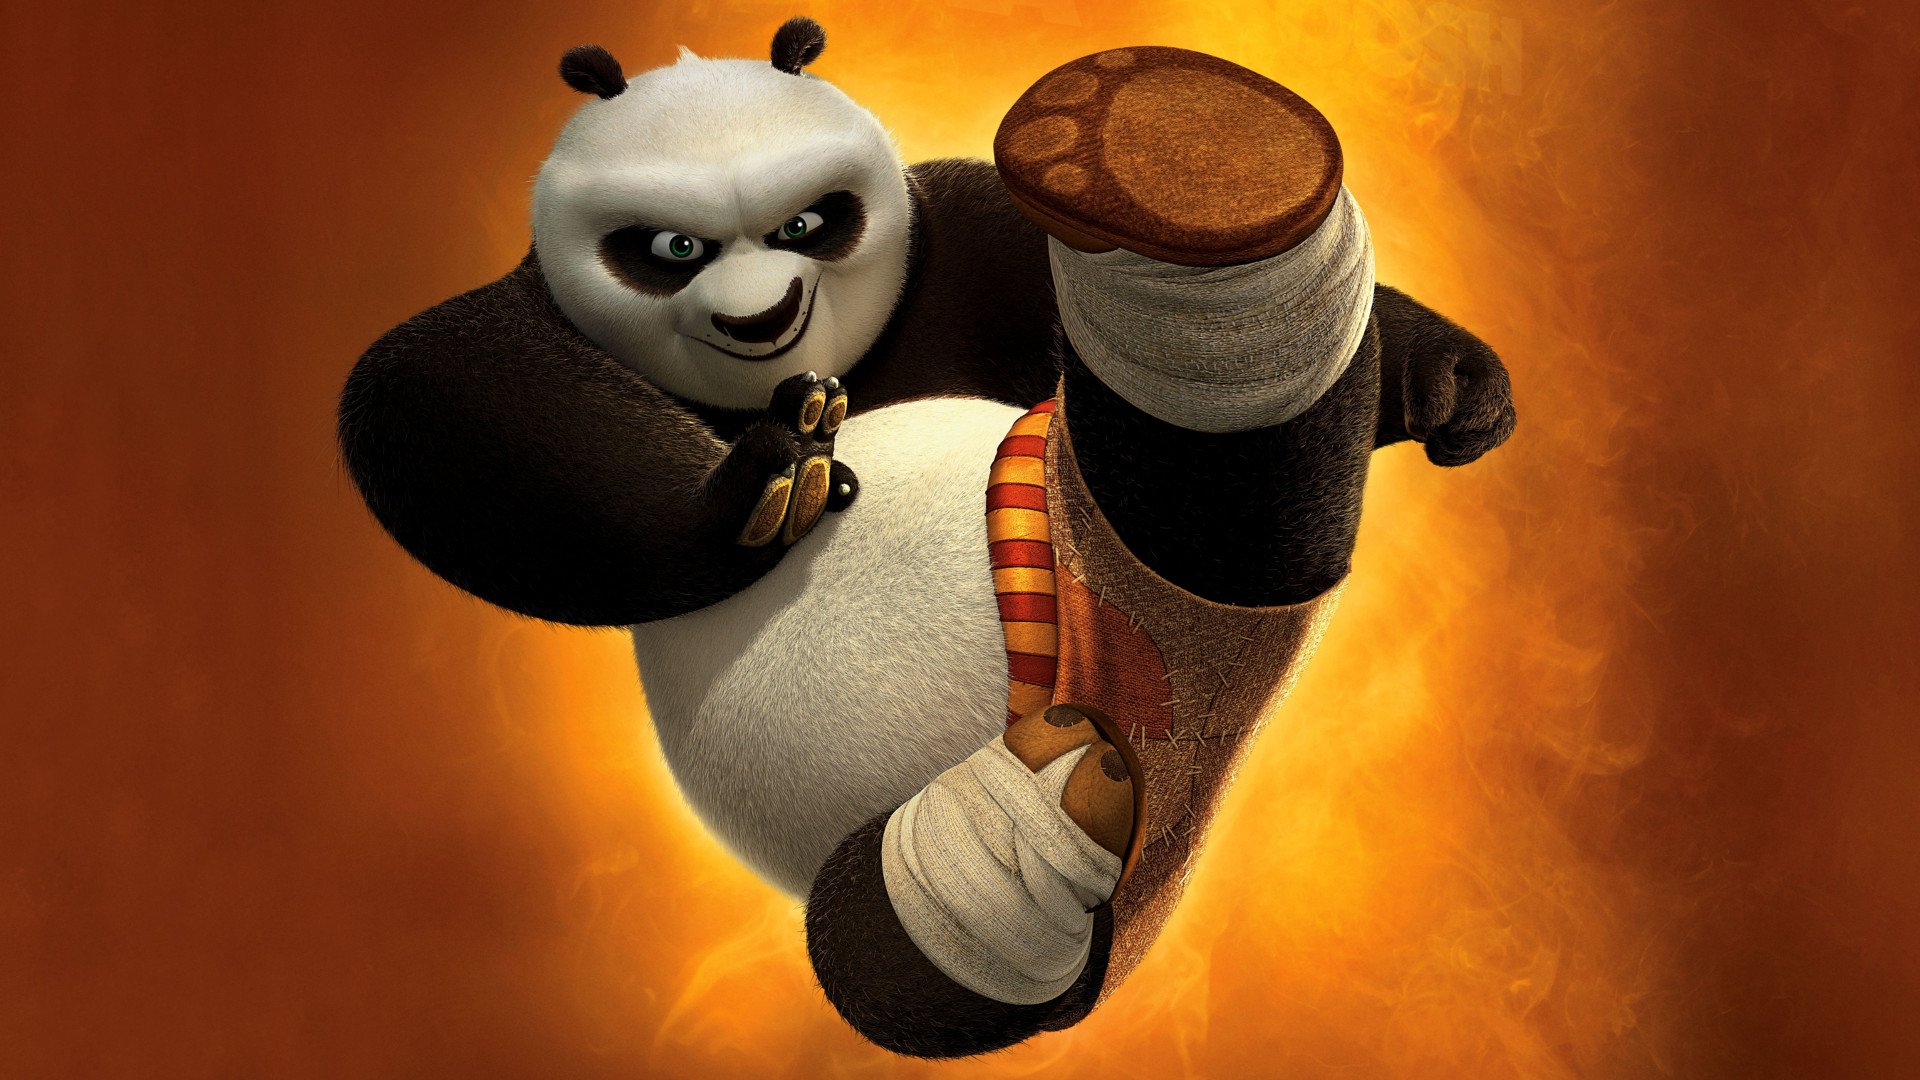 Kung Fu Panda 3 20th Century Fox 2016 Review Stg